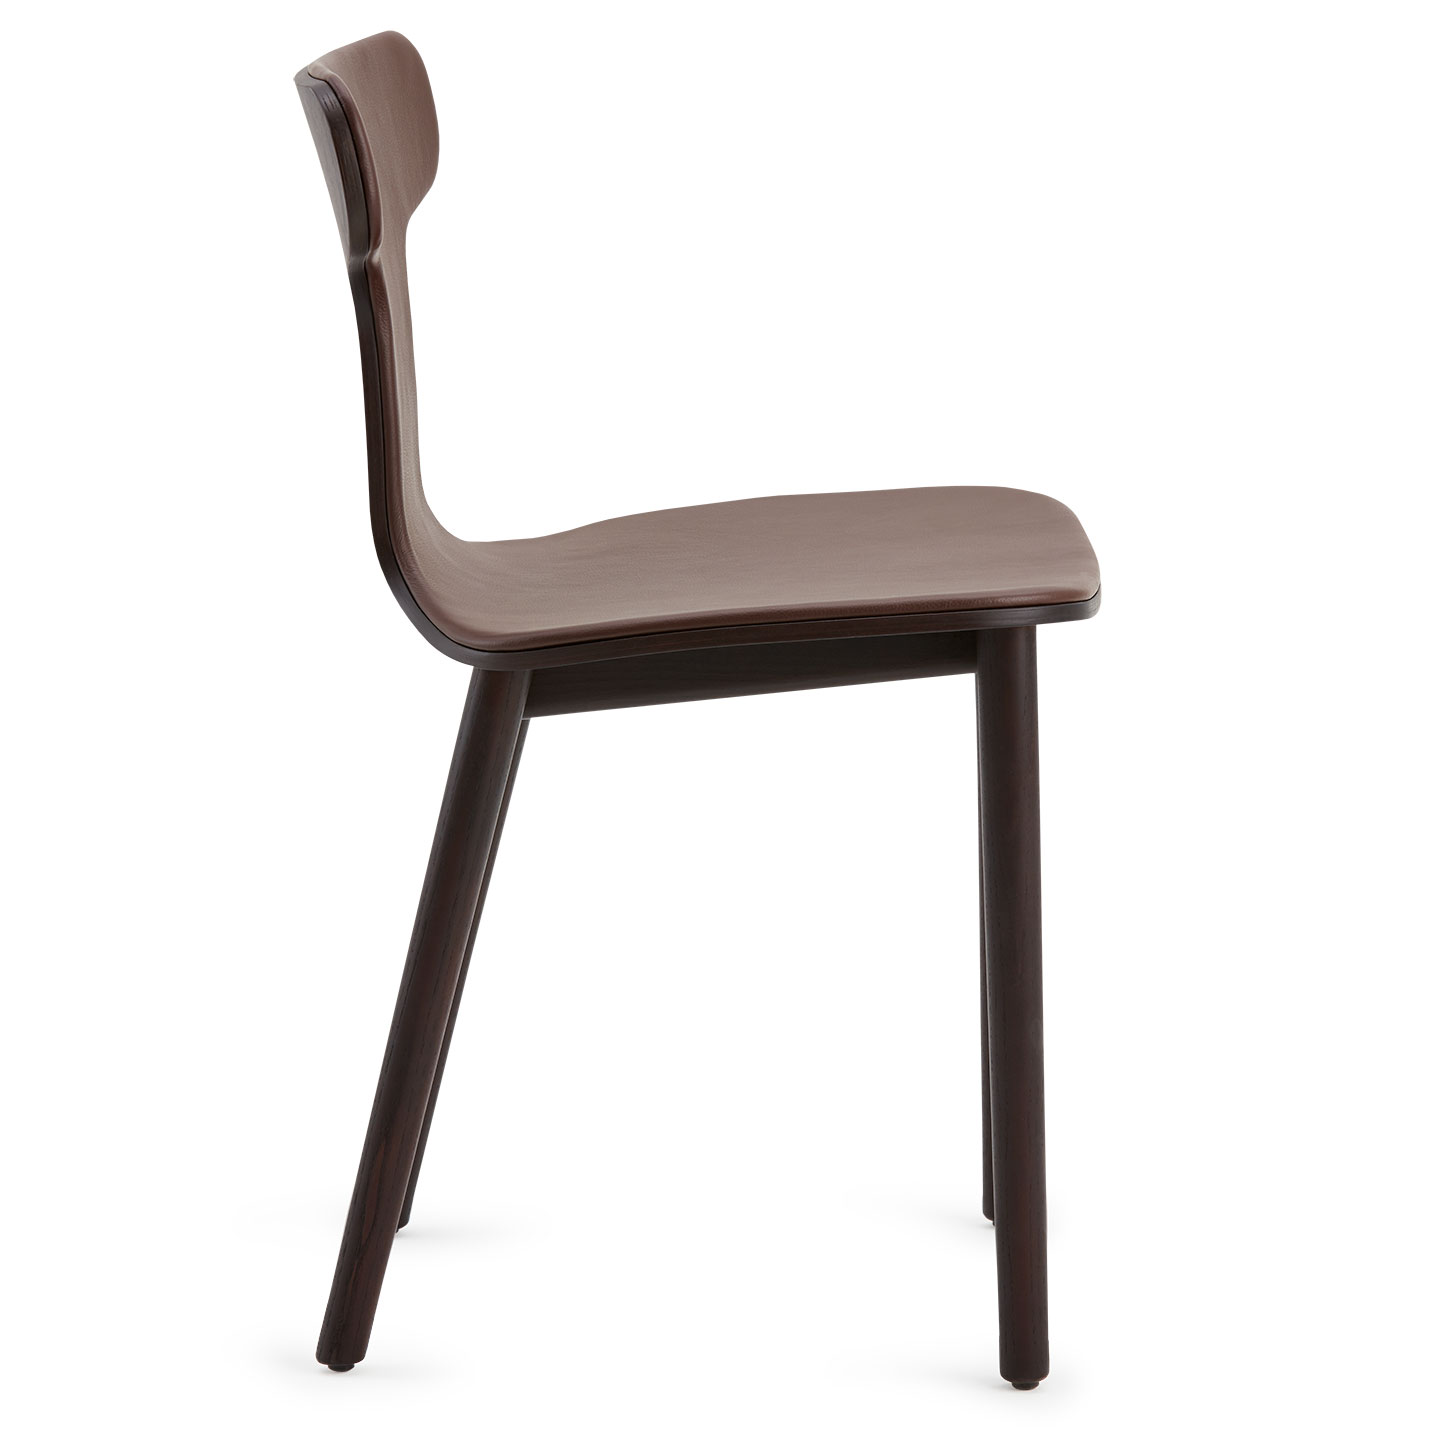 Haworth Bac One chair in dark brown side angle